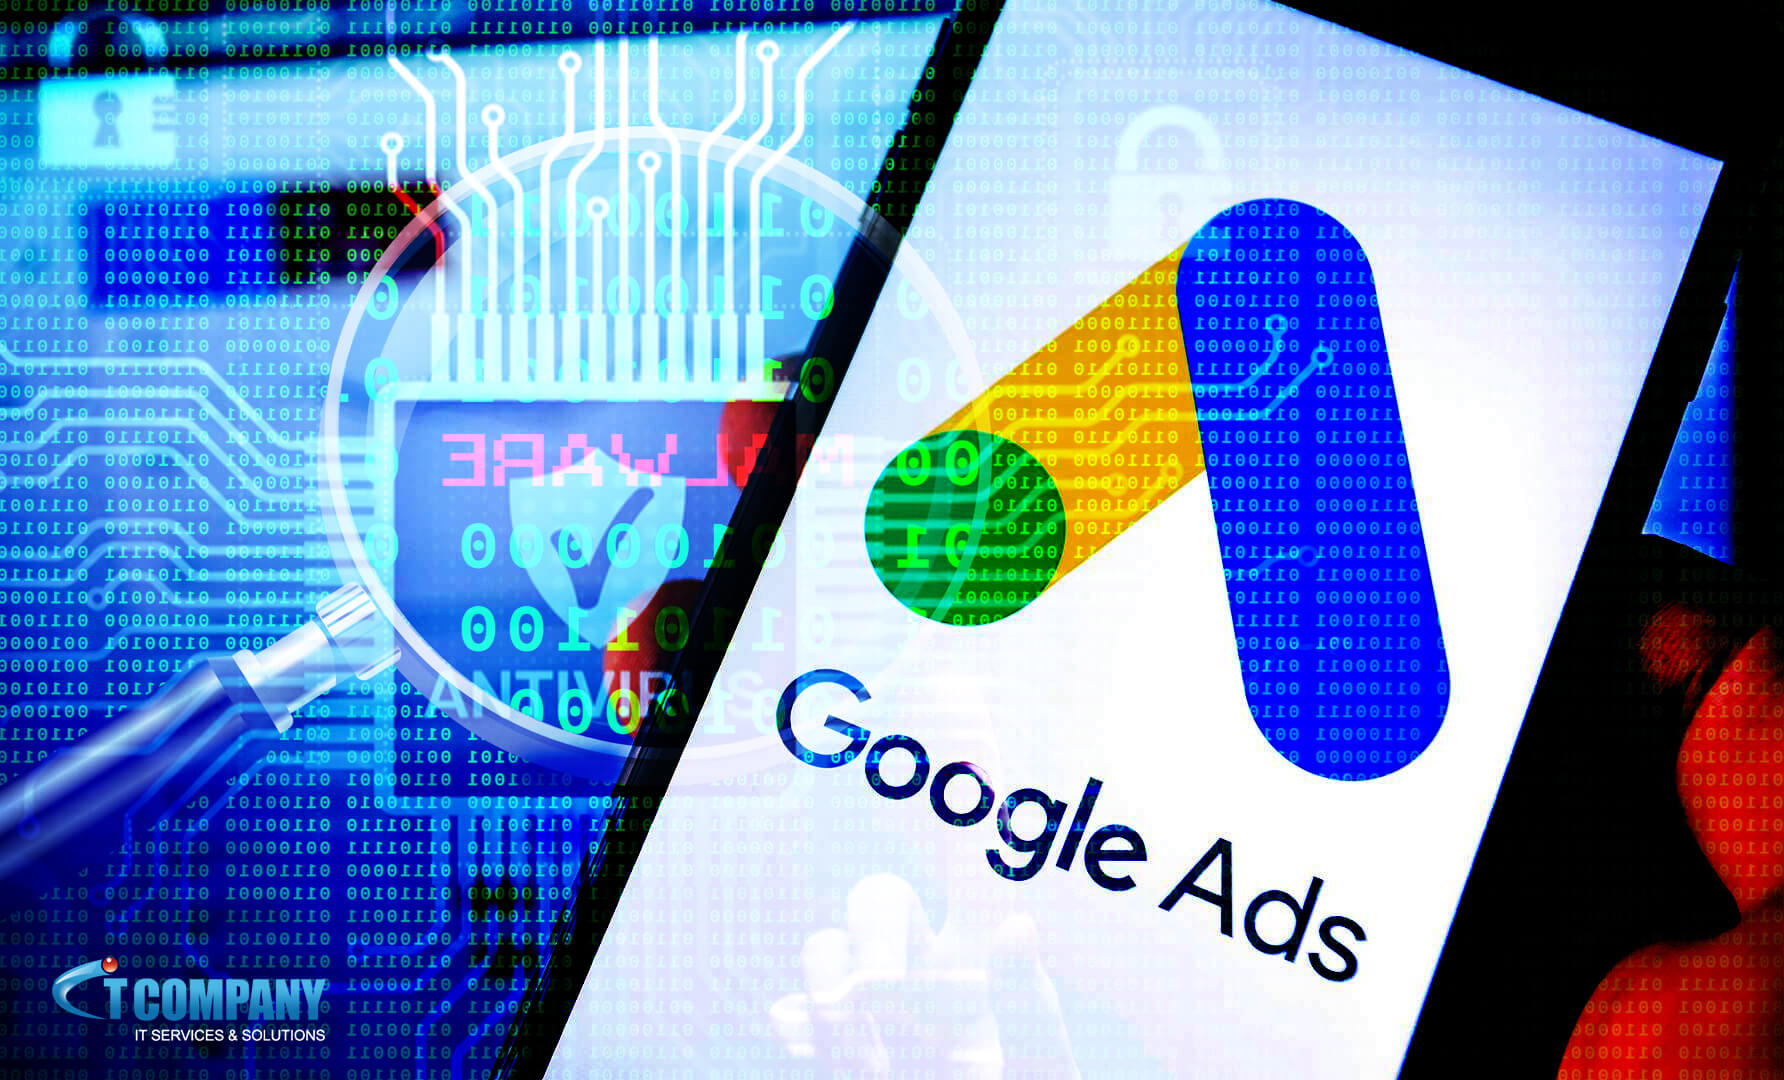 Virtualization: Google ads are spreading malware through it